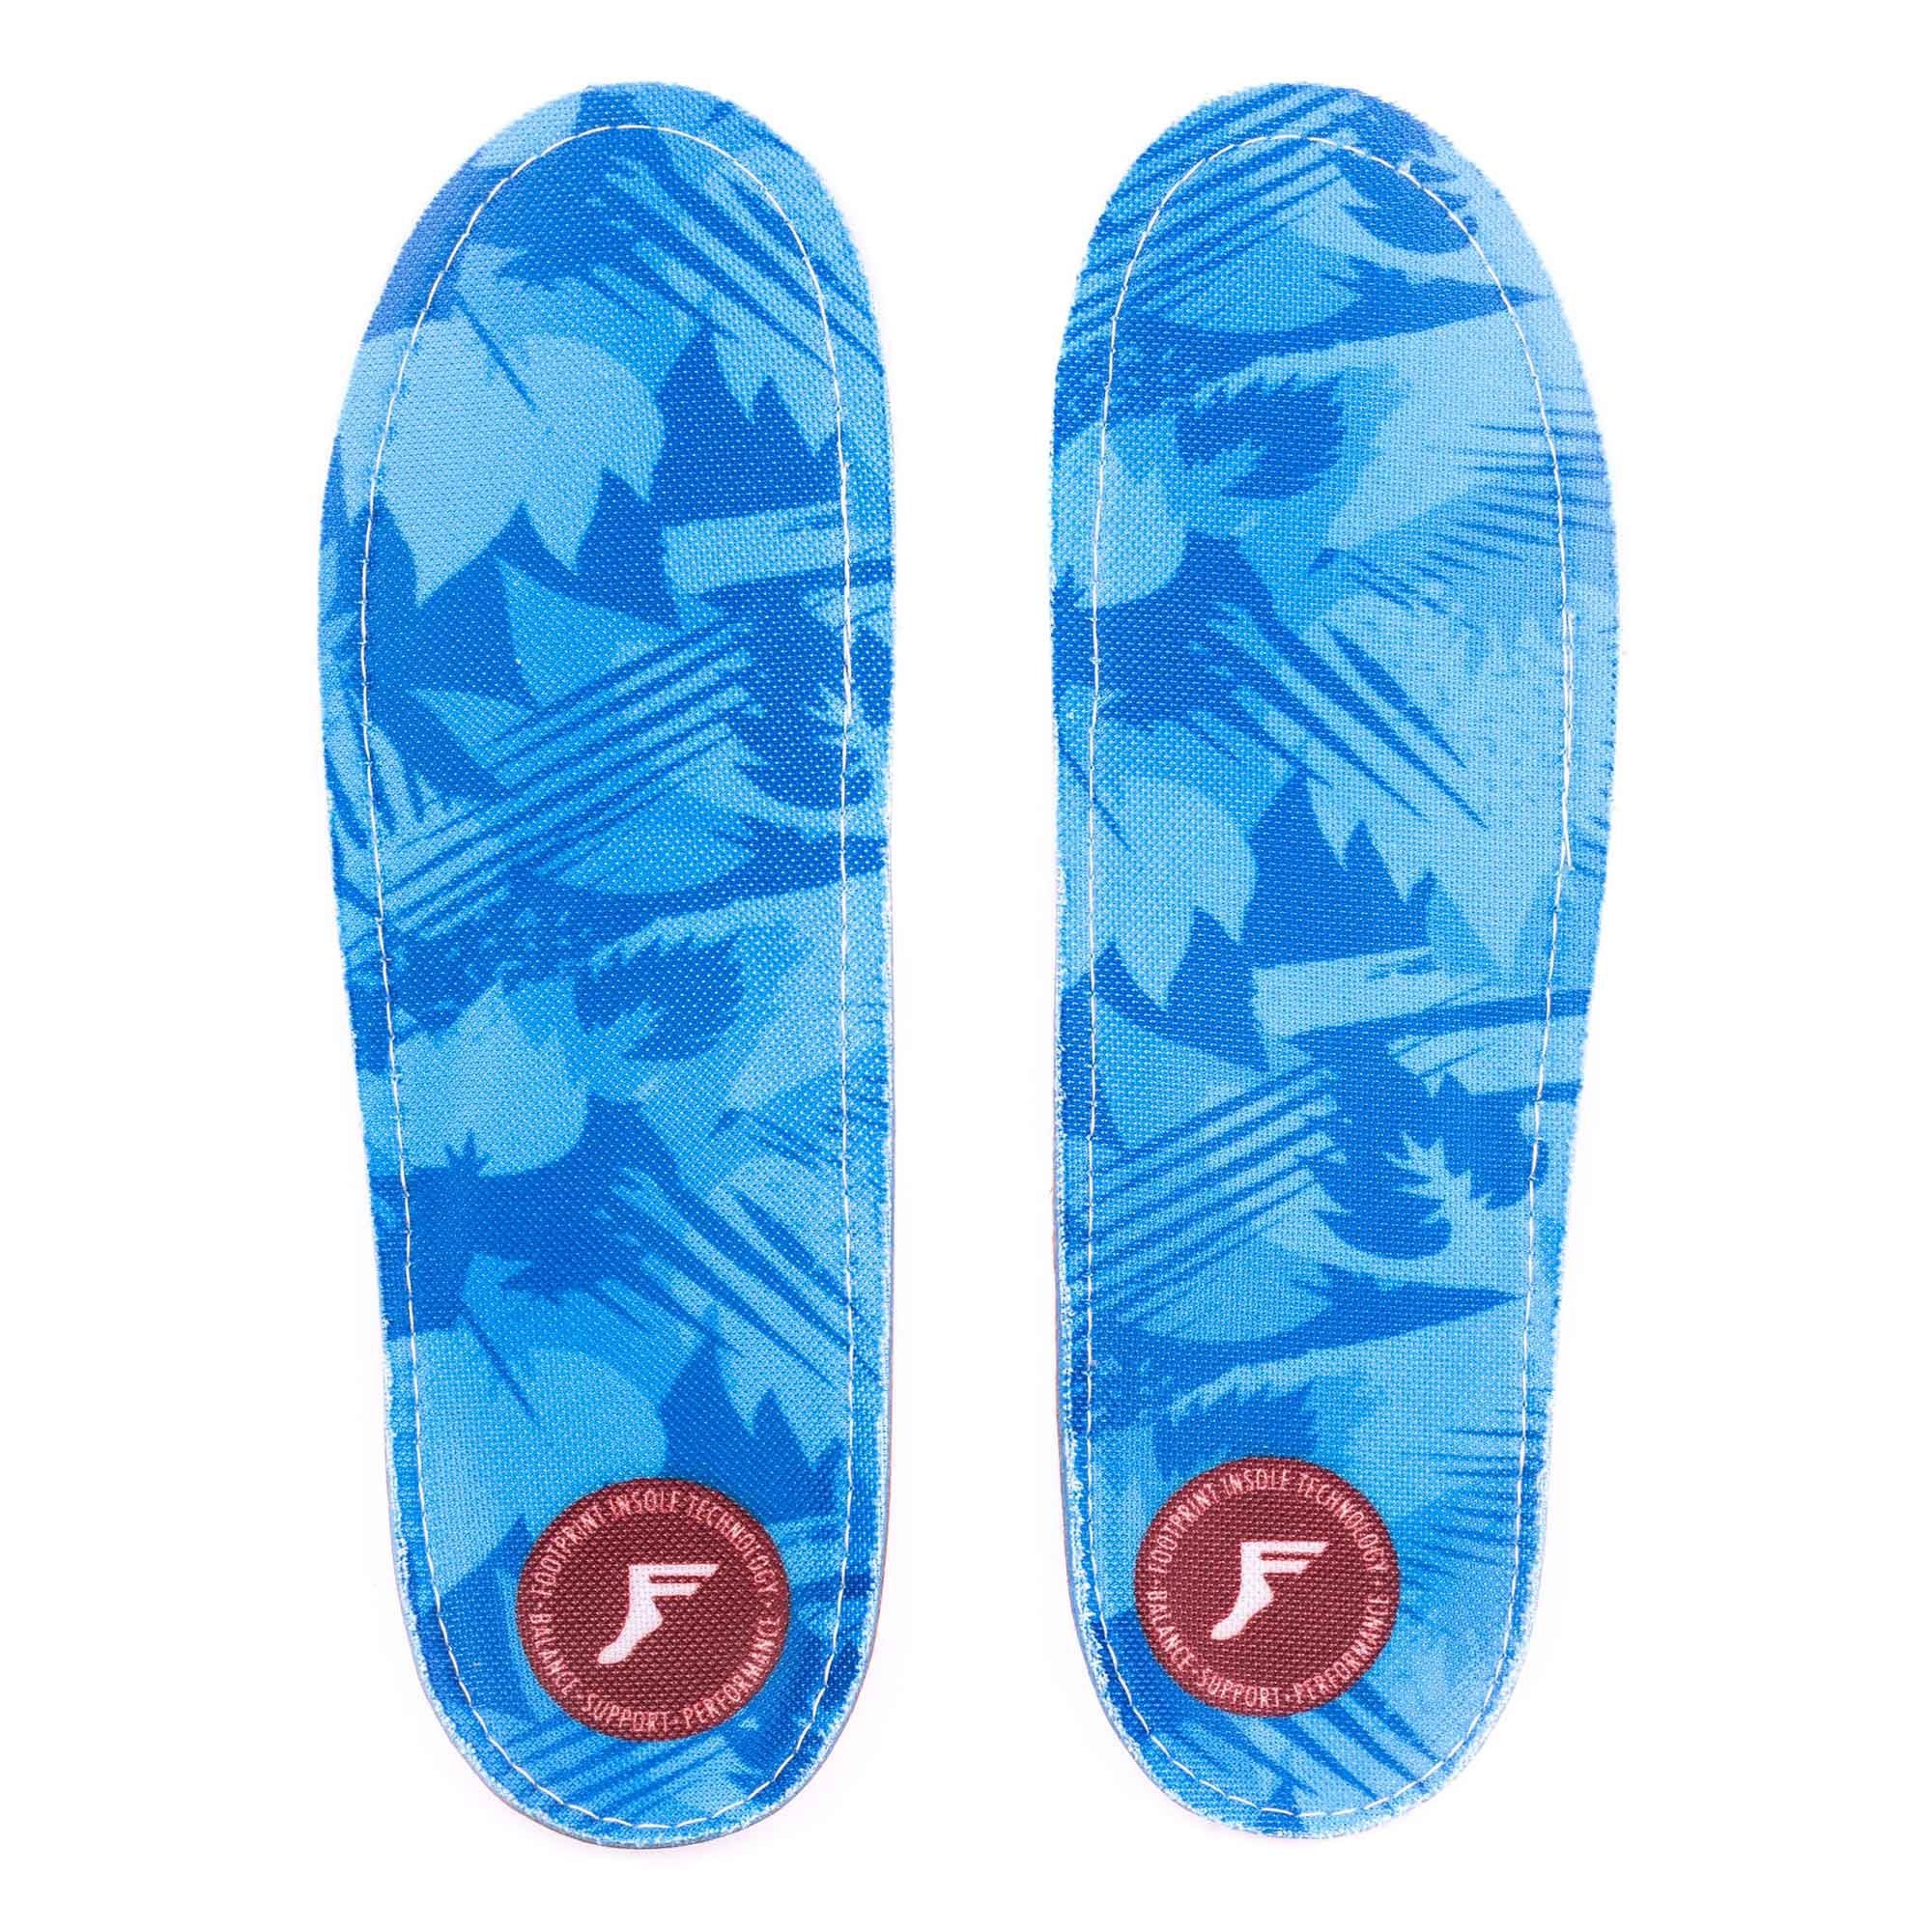 Footprint Insole Fuß- und Gelenkdämpfer Kingfoam Orthotics - Low (blue/camo) (1 Paar)